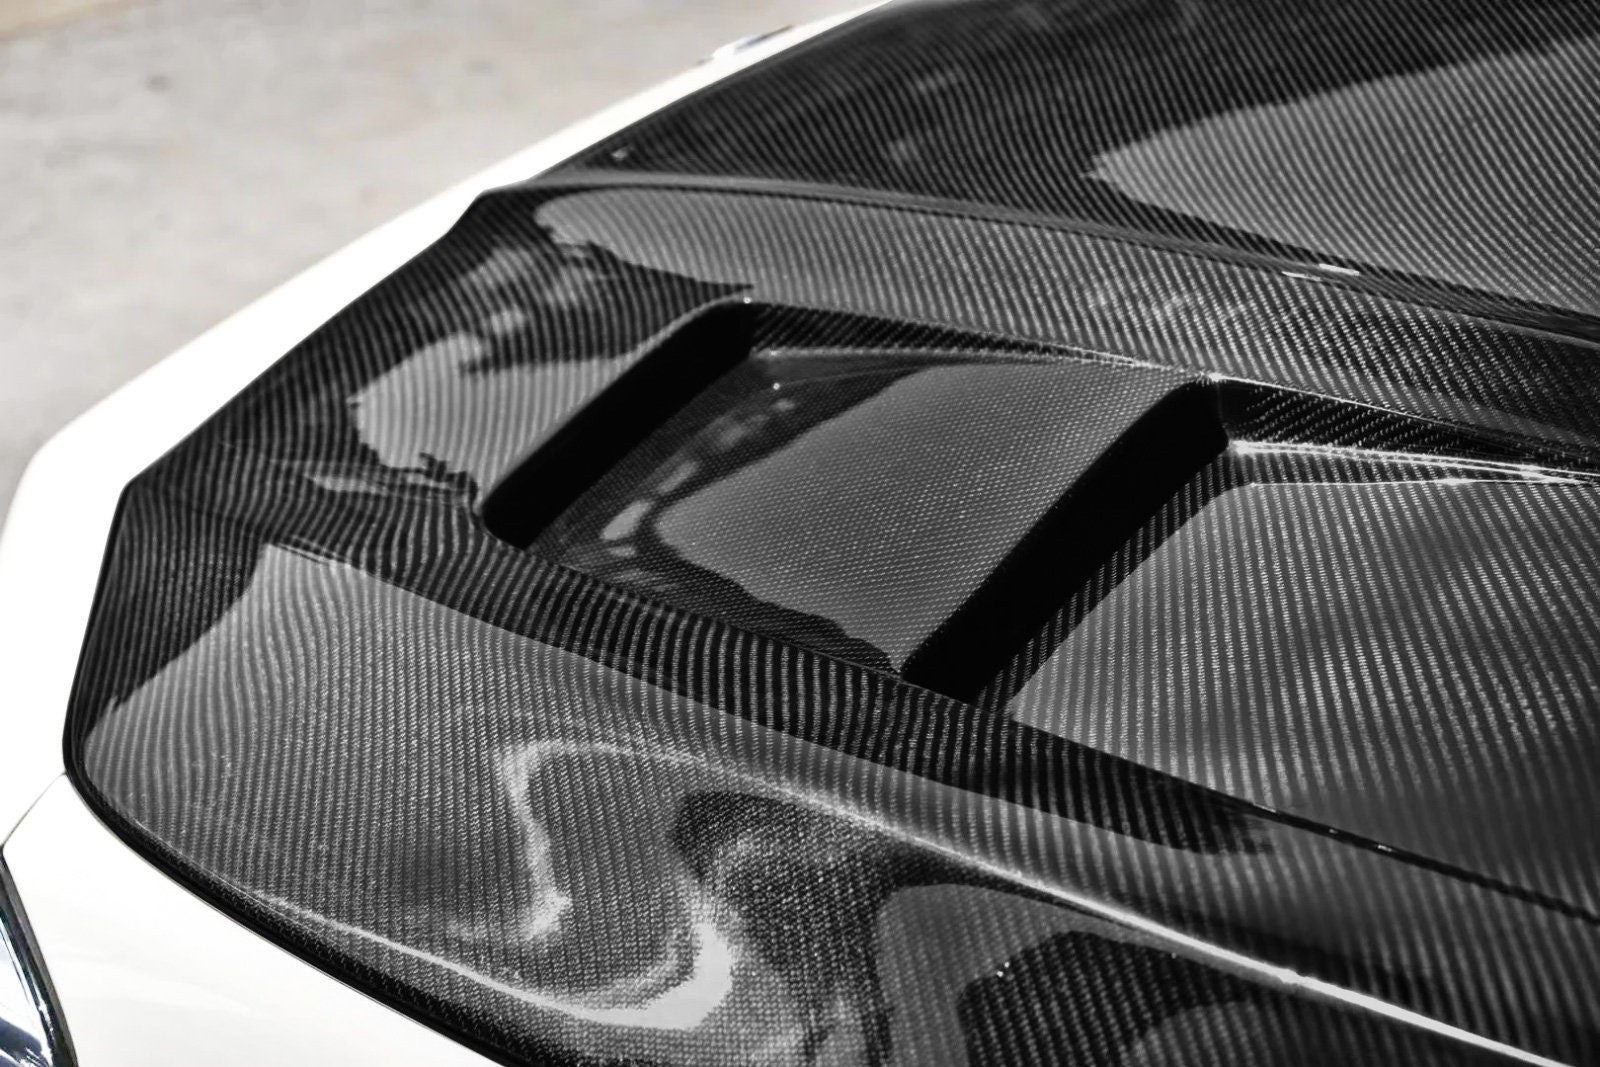 Black 5D High Gloss Carbon Fiber Car Vehicle Vinyl Wrap Sticker Decal Air  Release Bubble Free DIY Film 